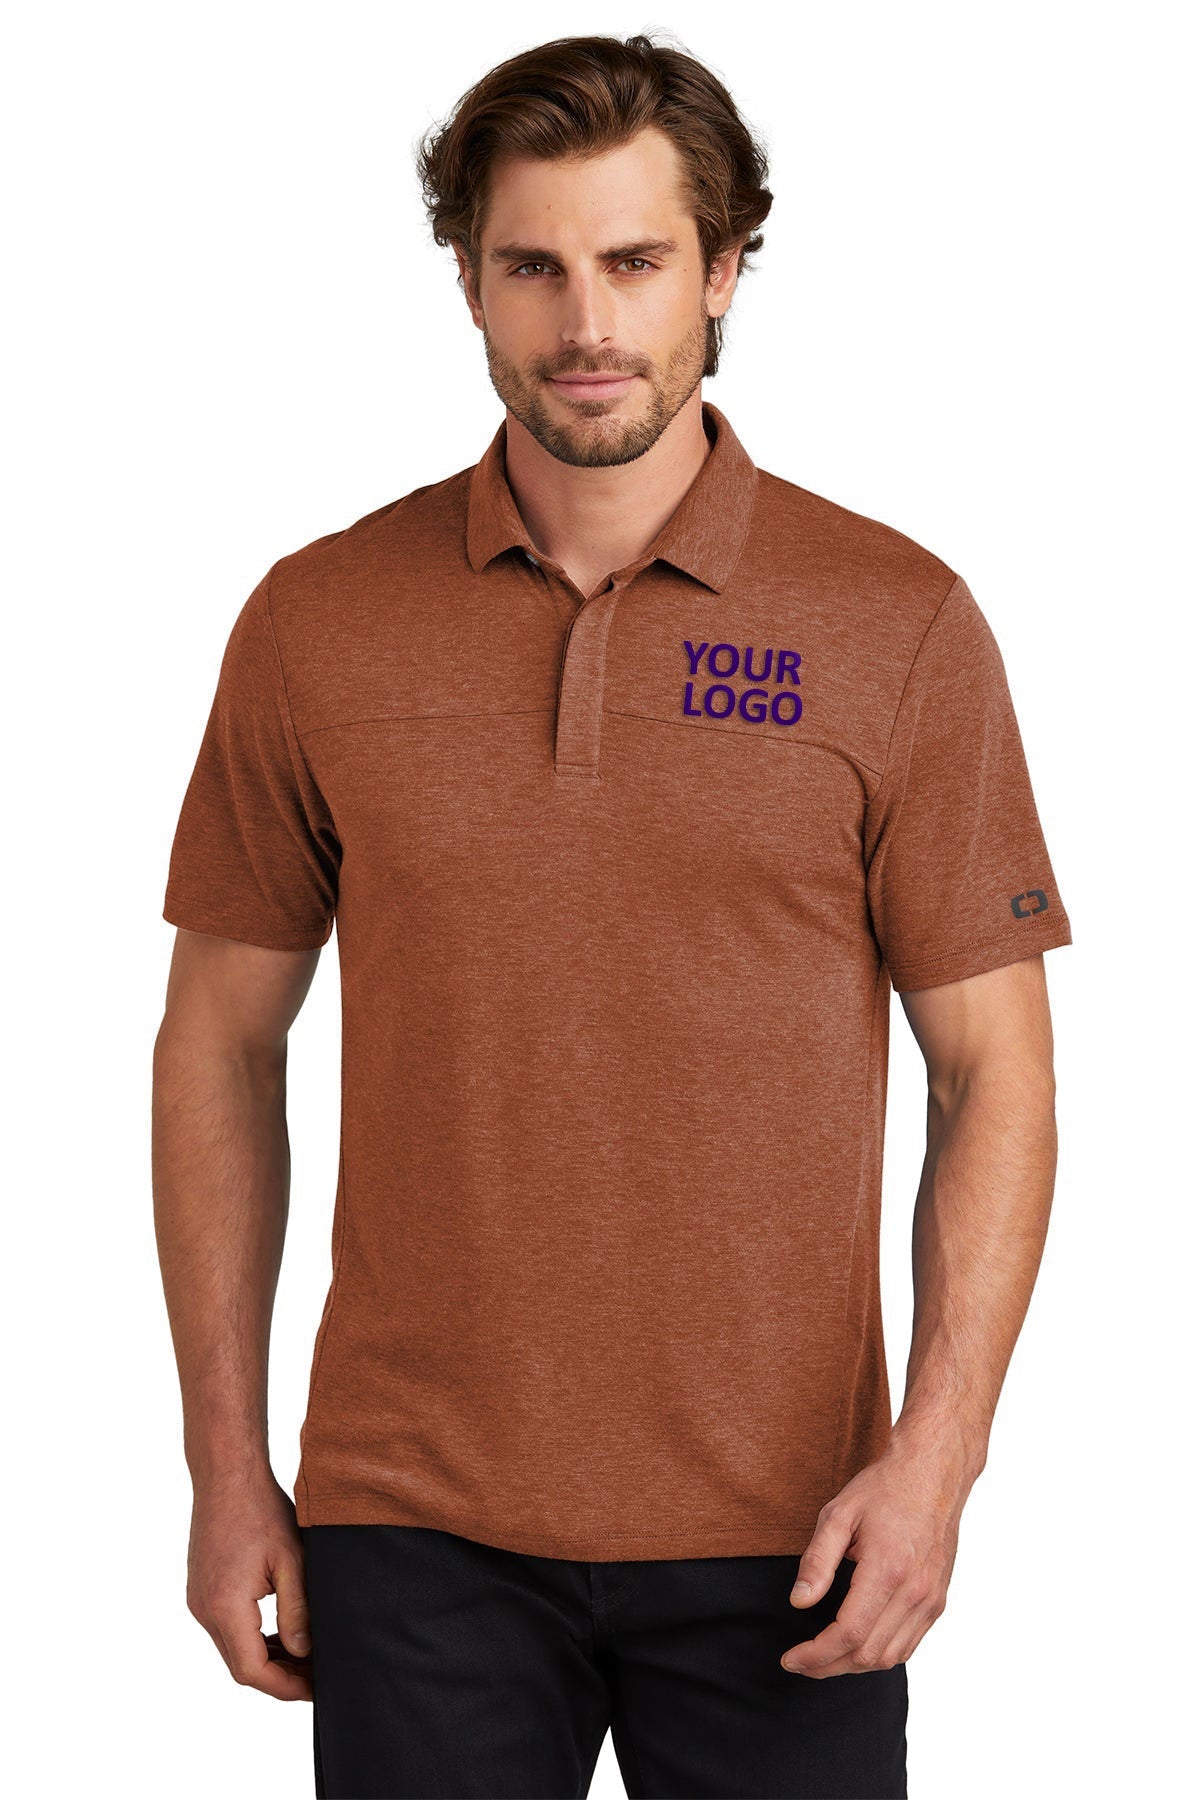 OGIO Deep Rust OG150 custom polo shirts with logo